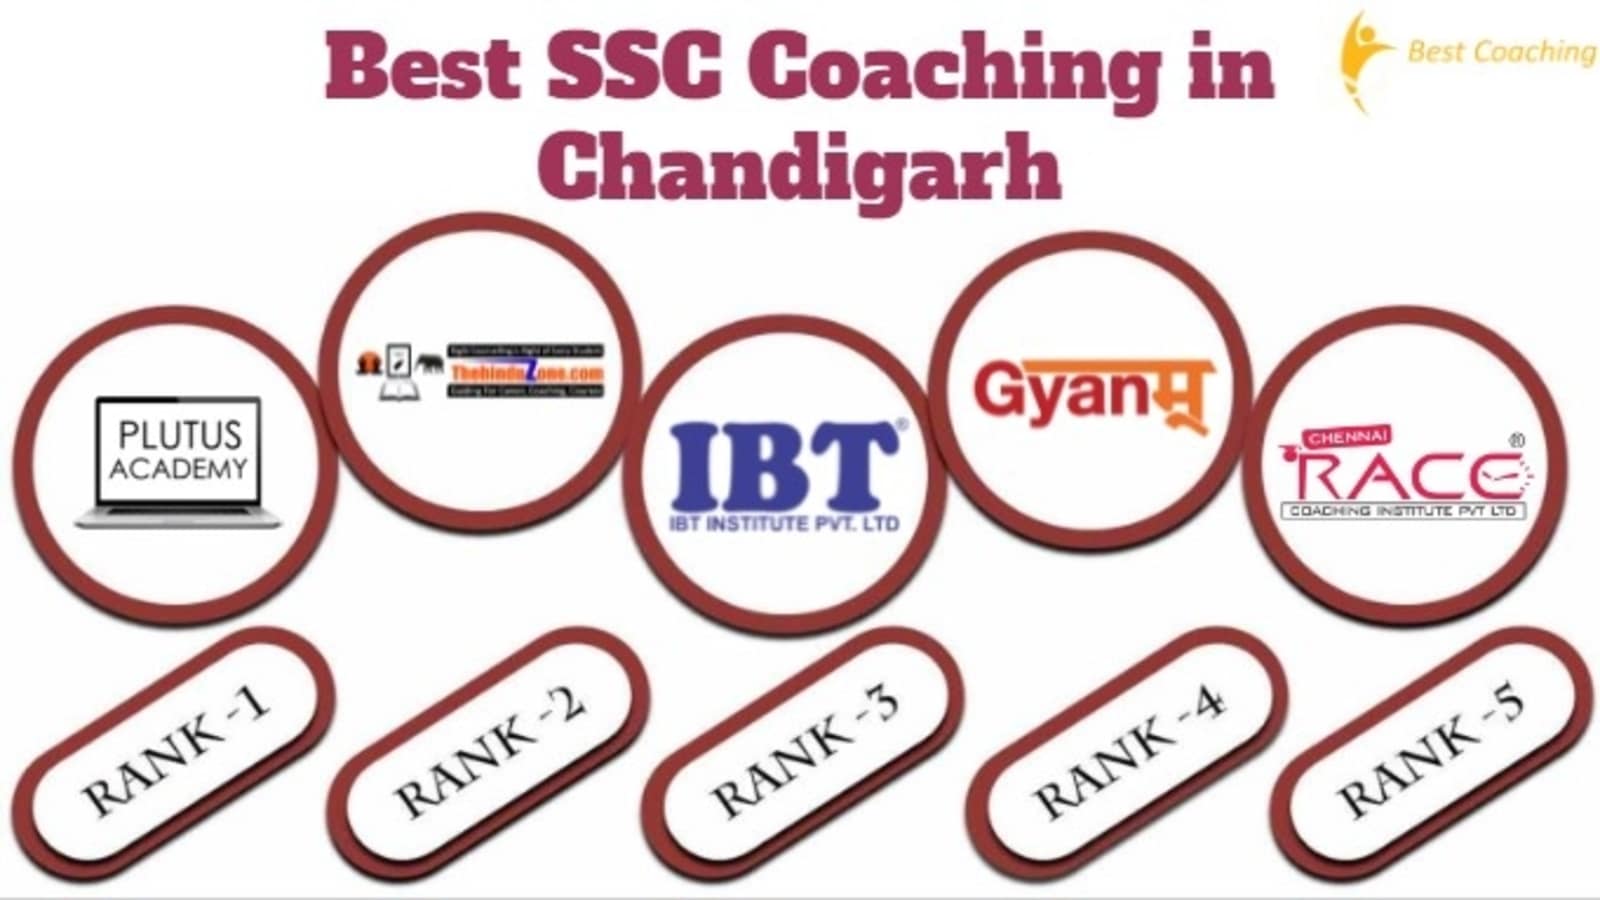 Best SSC Coaching in Chandigarh